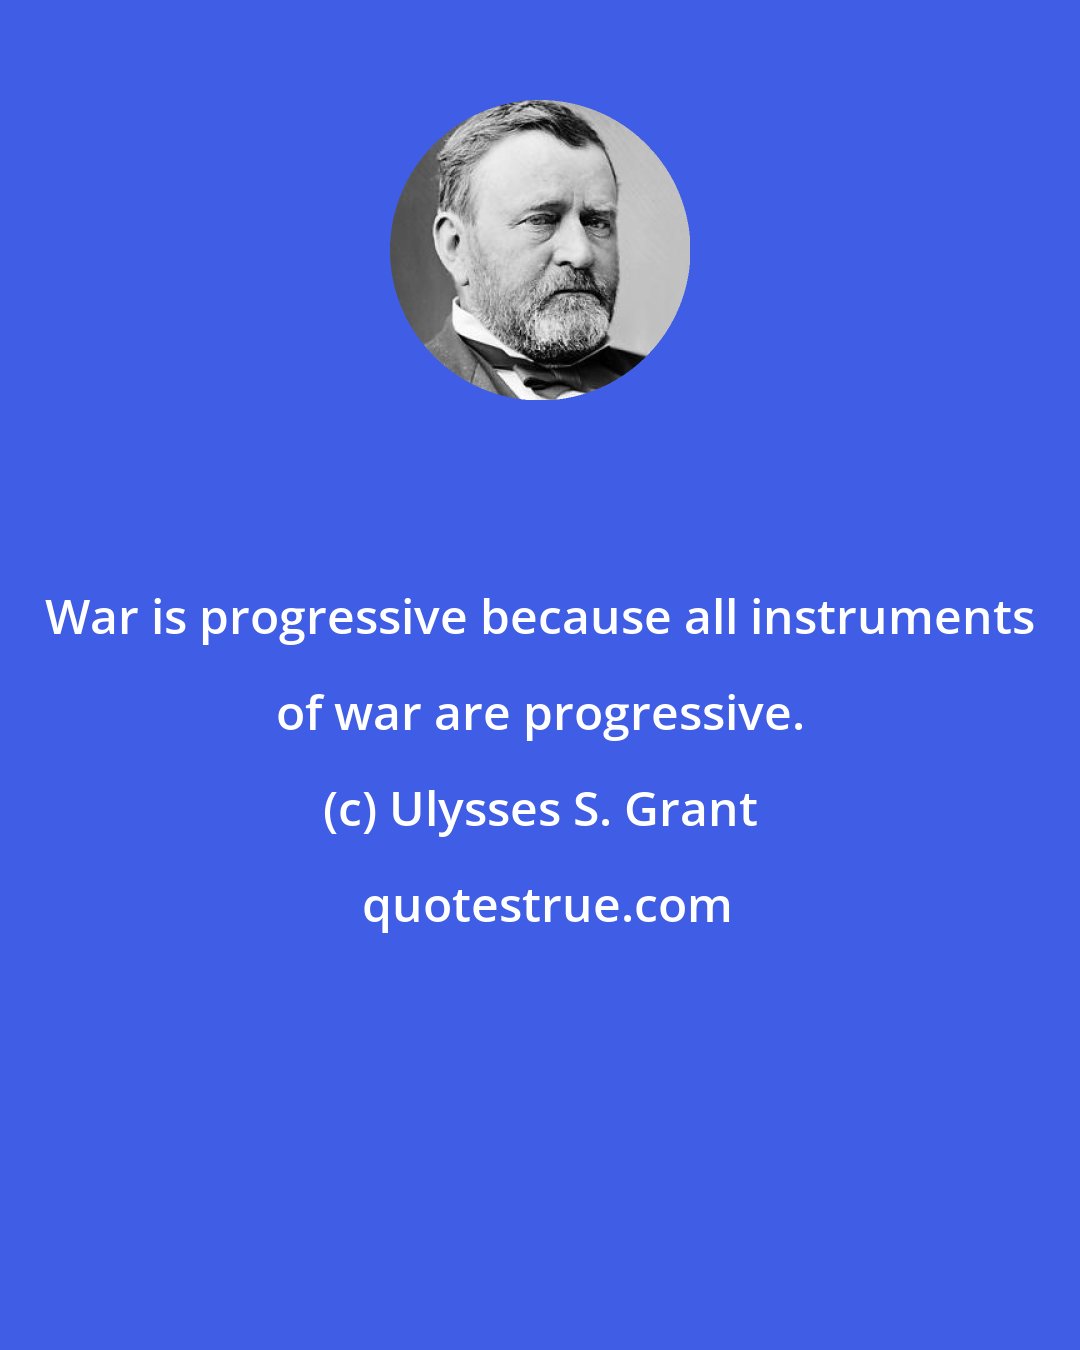 Ulysses S. Grant: War is progressive because all instruments of war are progressive.